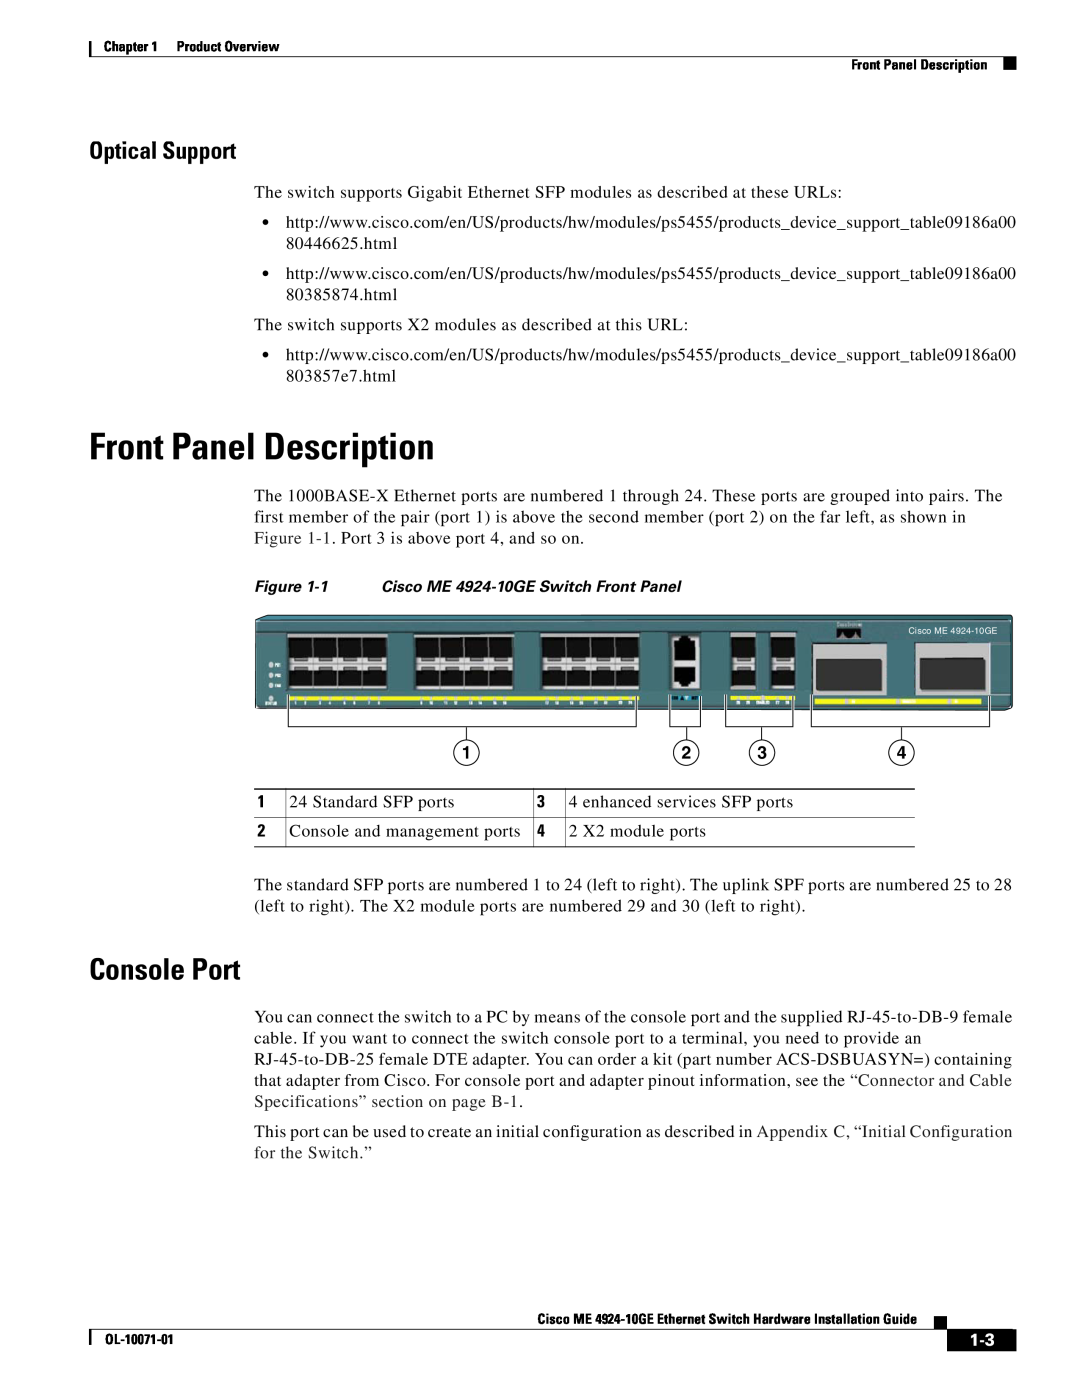 Cisco Systems ME 4924-10GE manual Front Panel Description, Console Port, Optical Support 